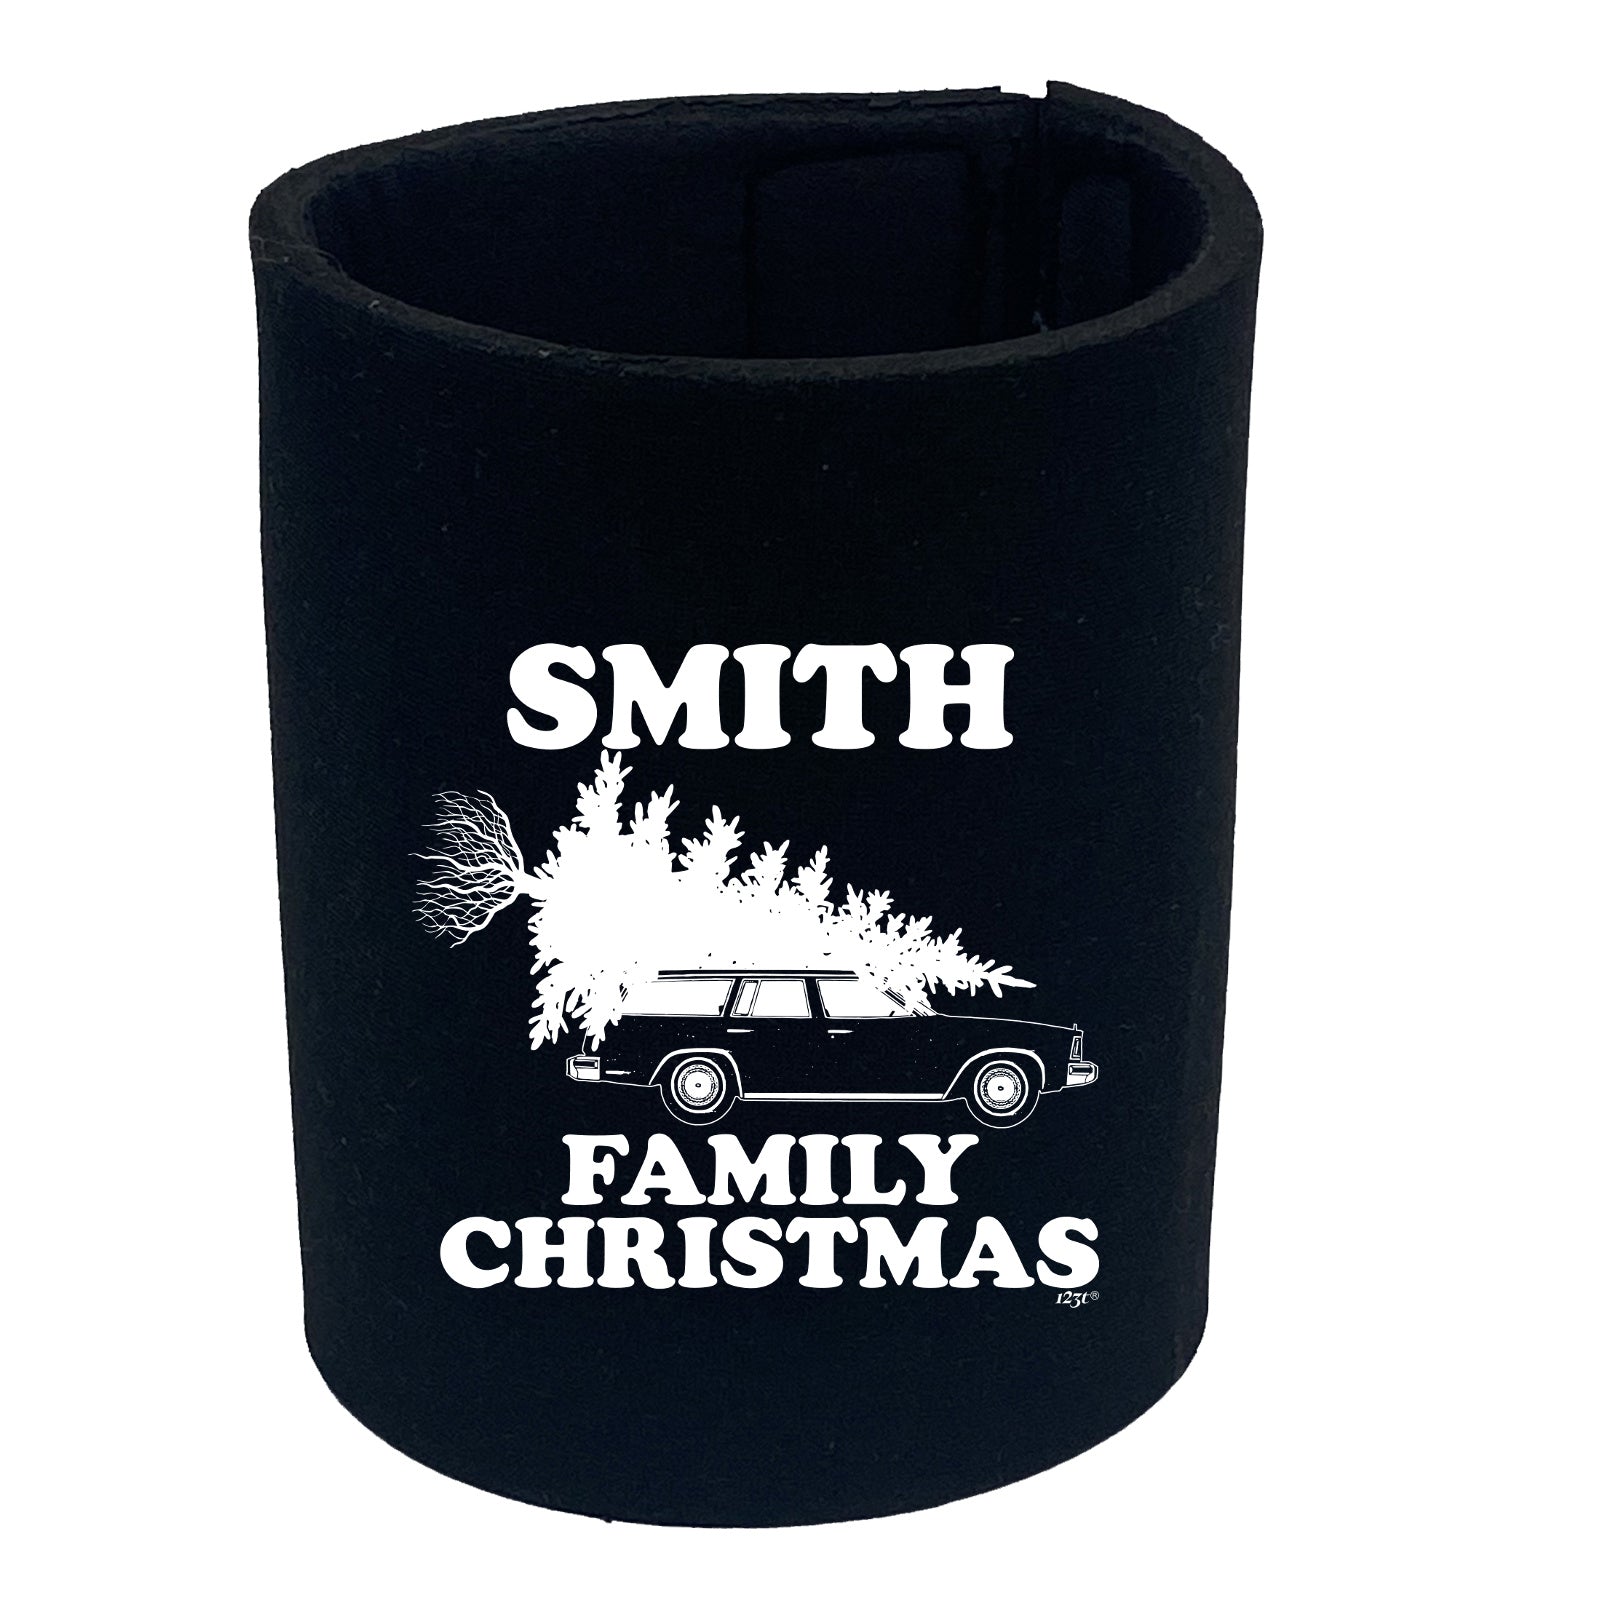 Family Christmas Smith - Funny Stubby Holder